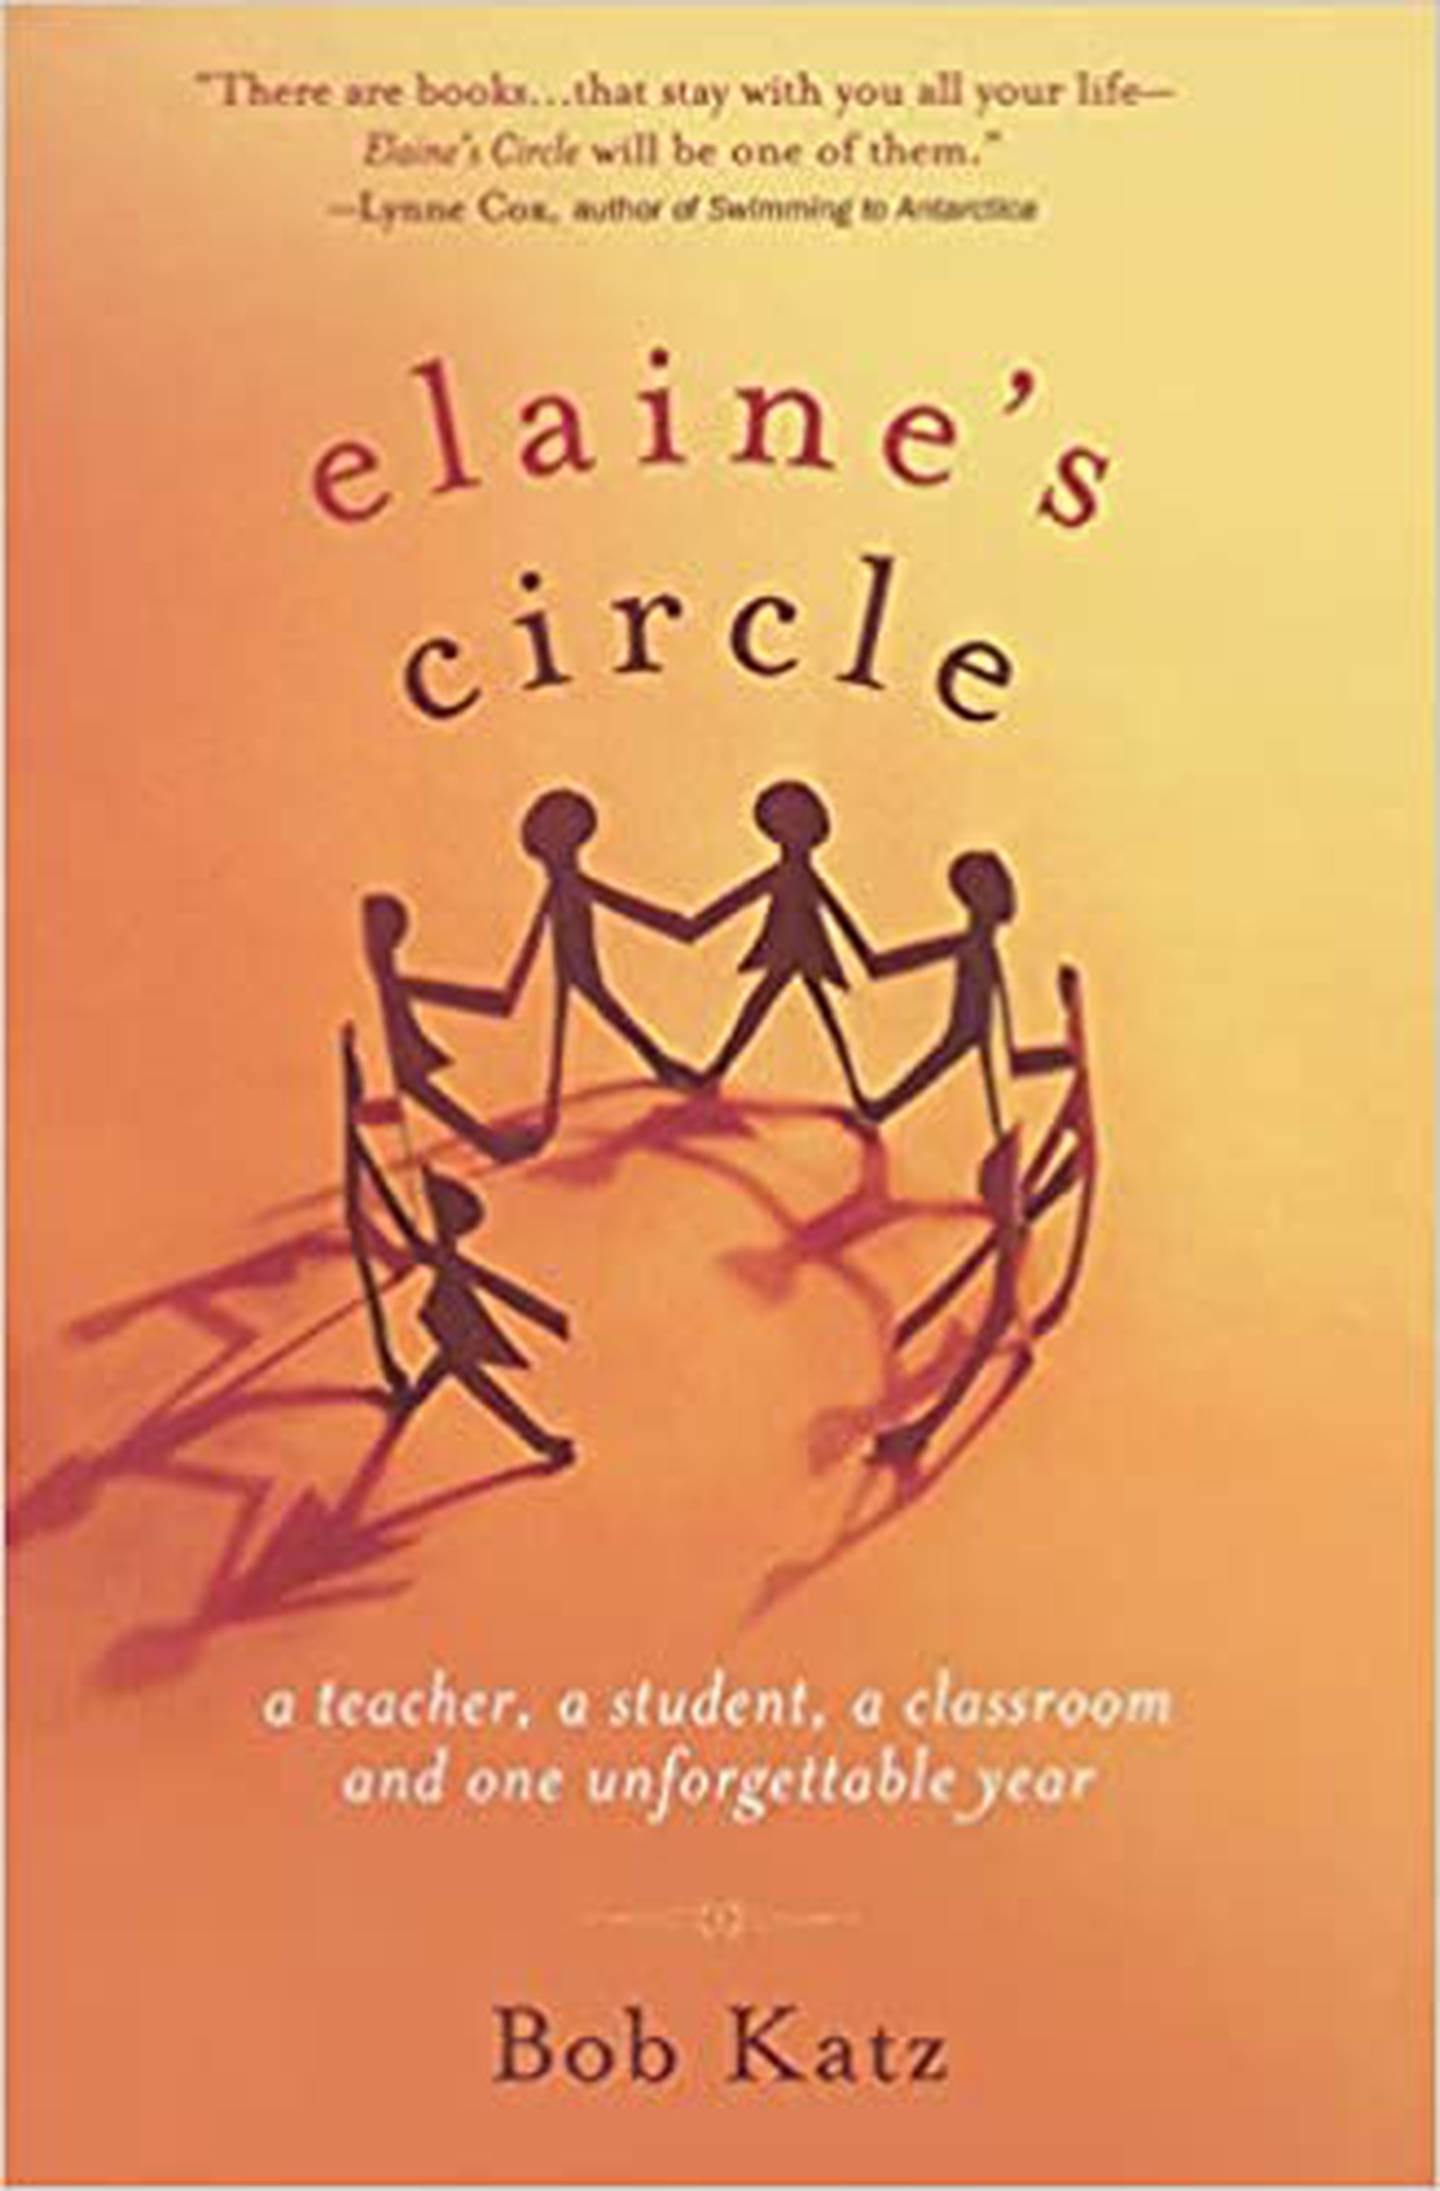 “Elaine’s Circle: A Teacher, A Student, A Classroom and One Unforgettable Year,”  by Bob Katz